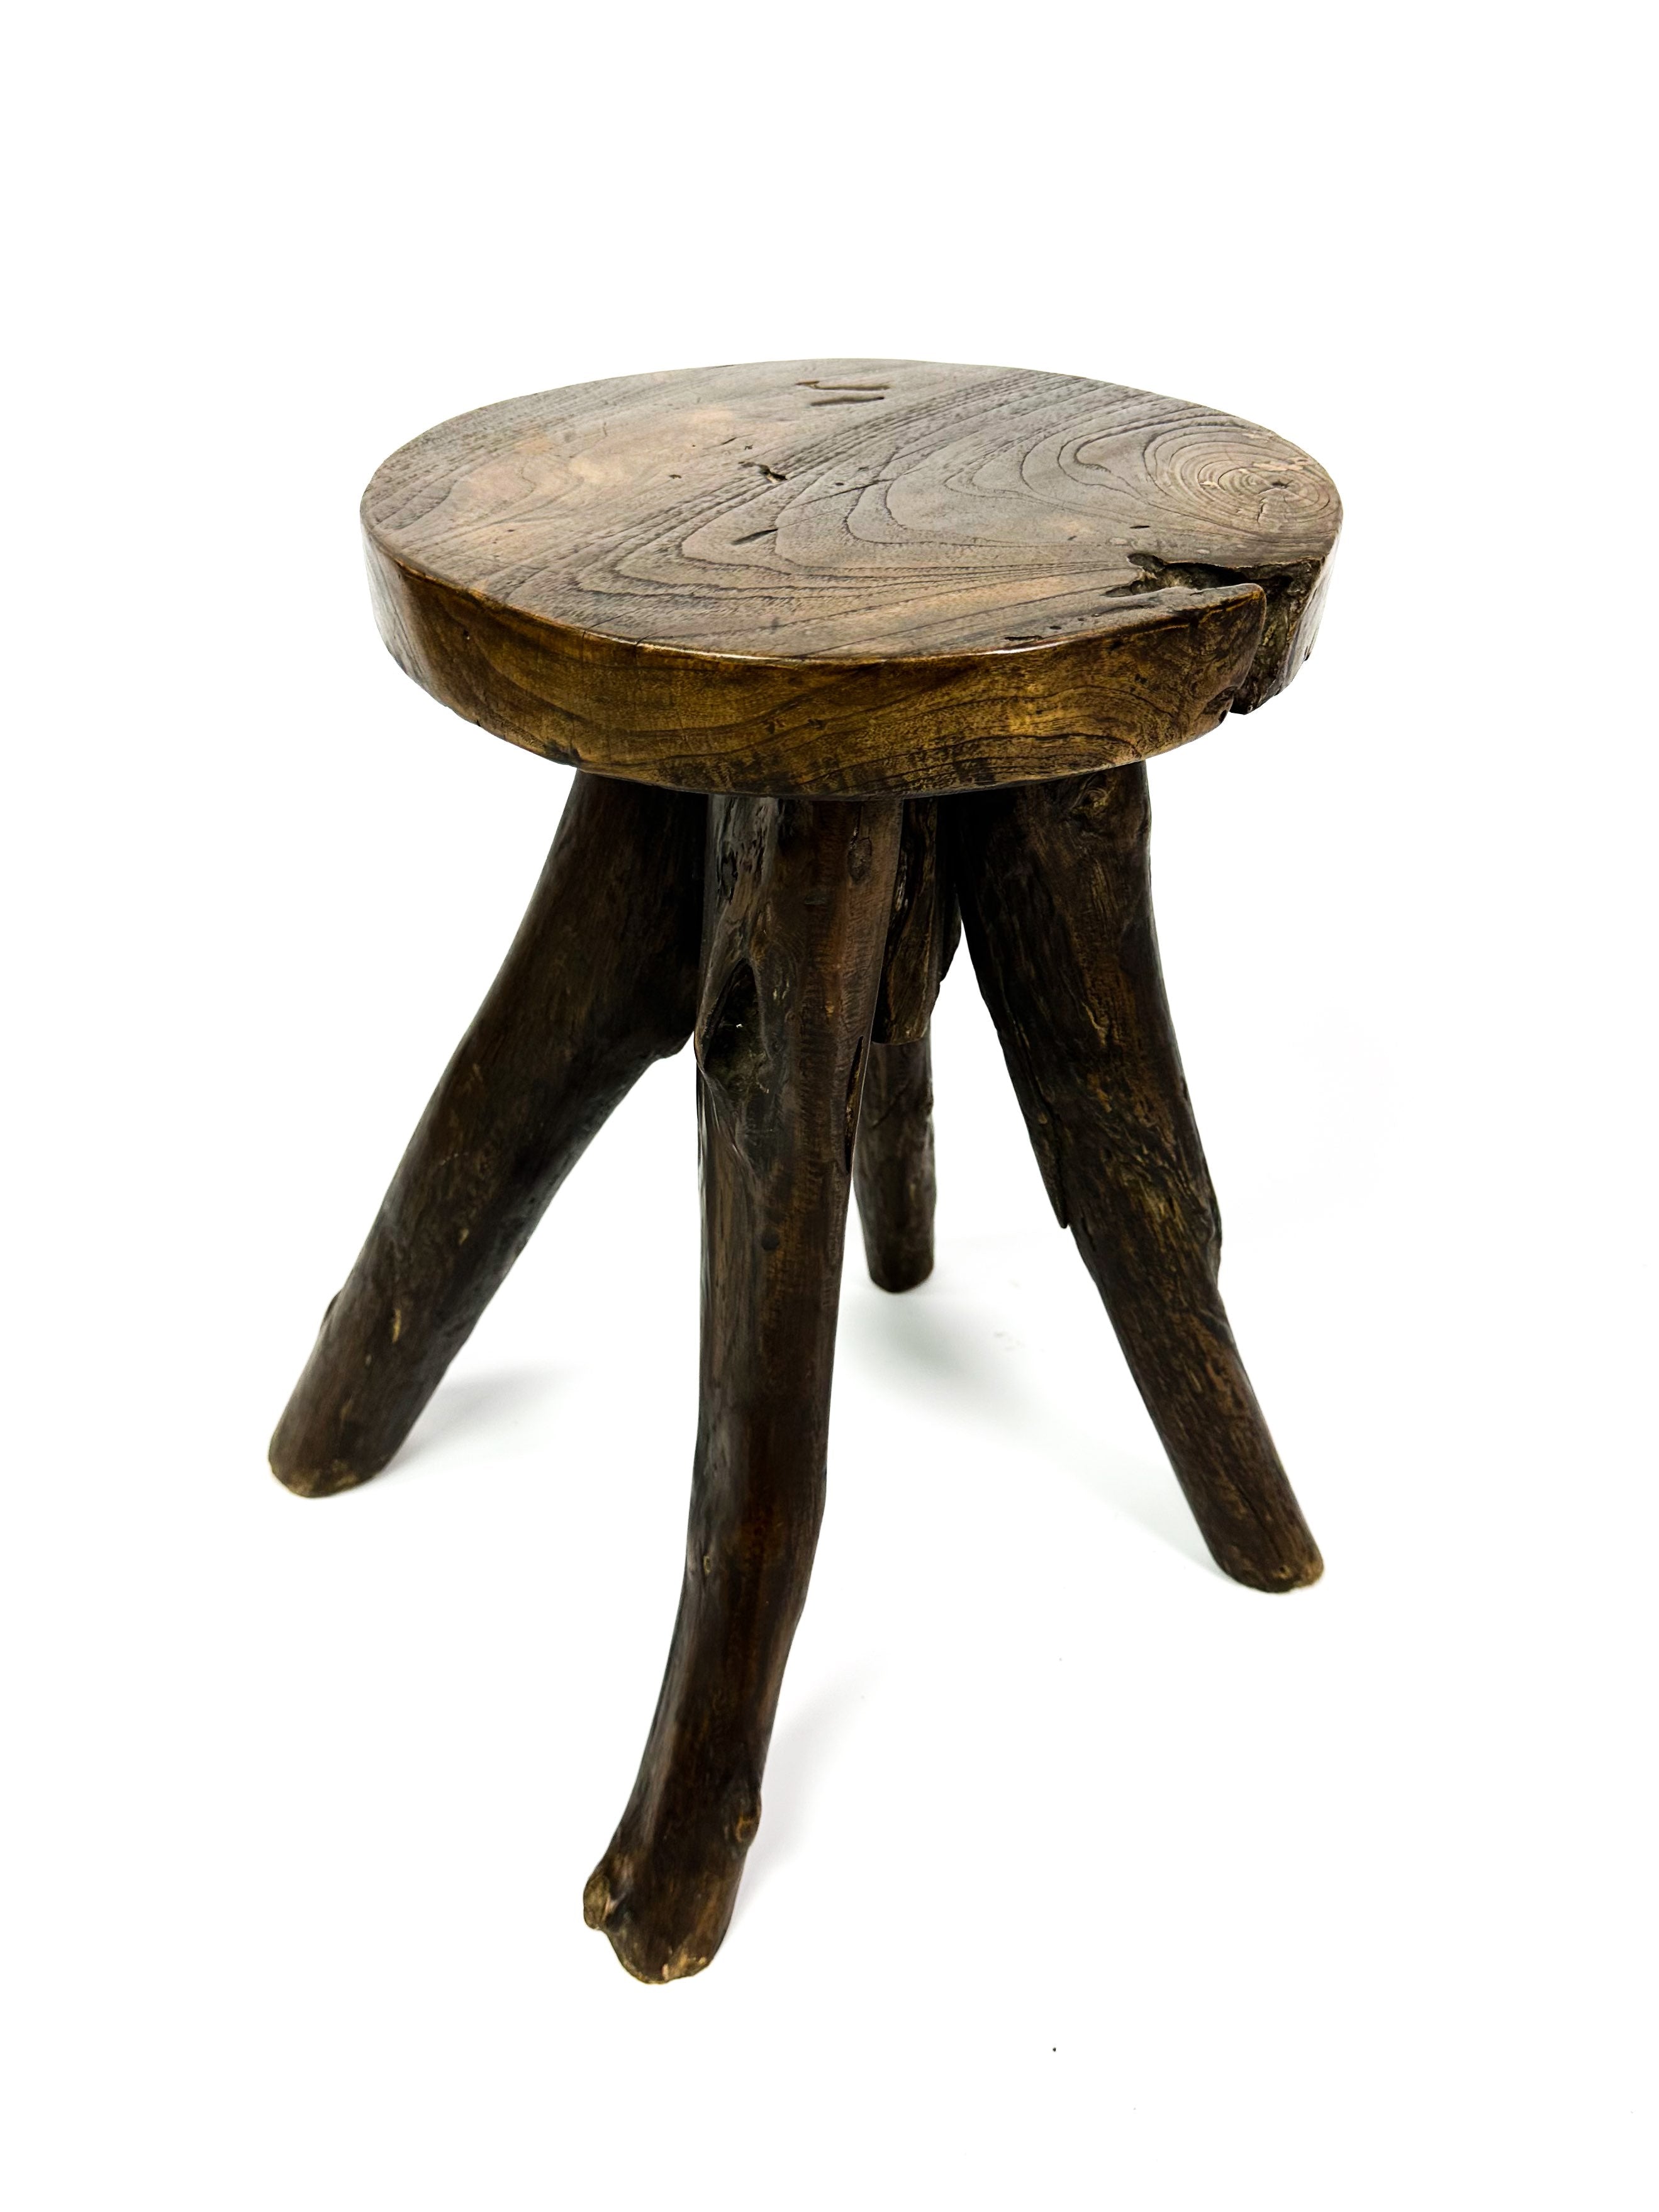 The teak 4-legged stool